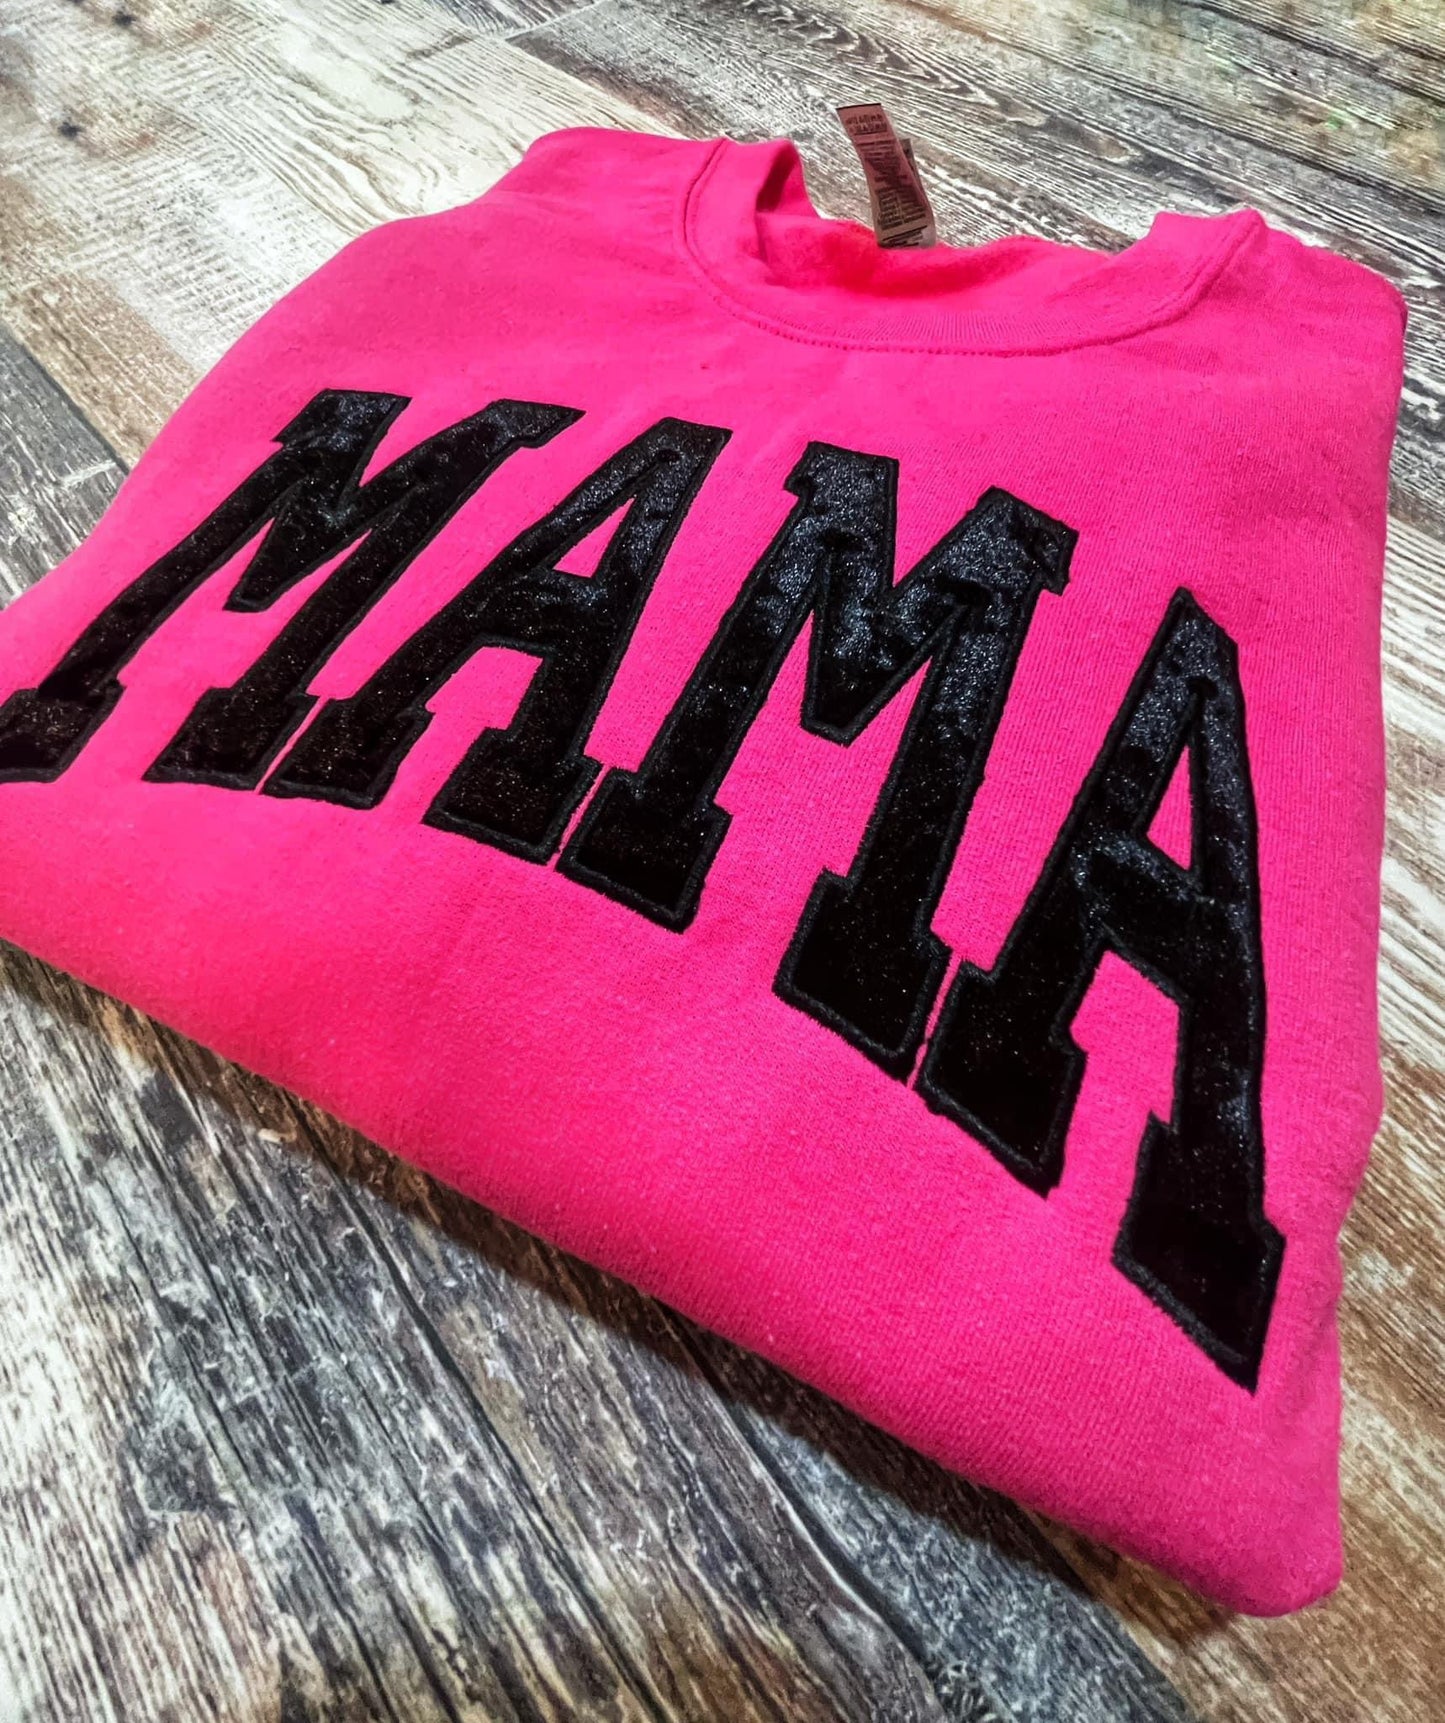 Hot Pink Velvet Embroidered Mama Sweatshirt